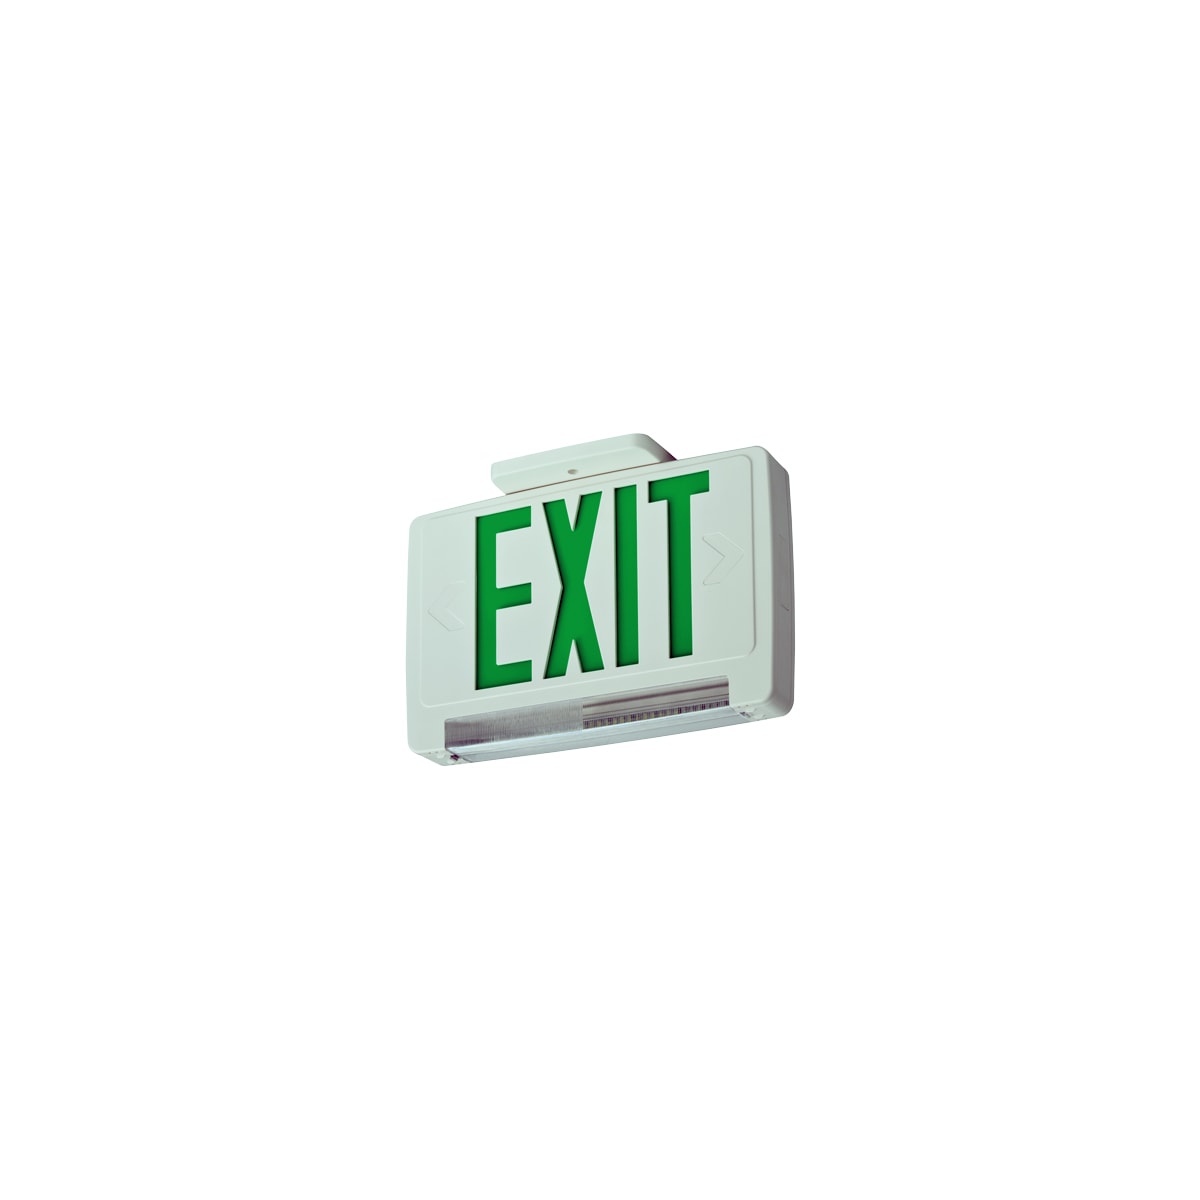 Emergency & Exit, Lithonia Lighting